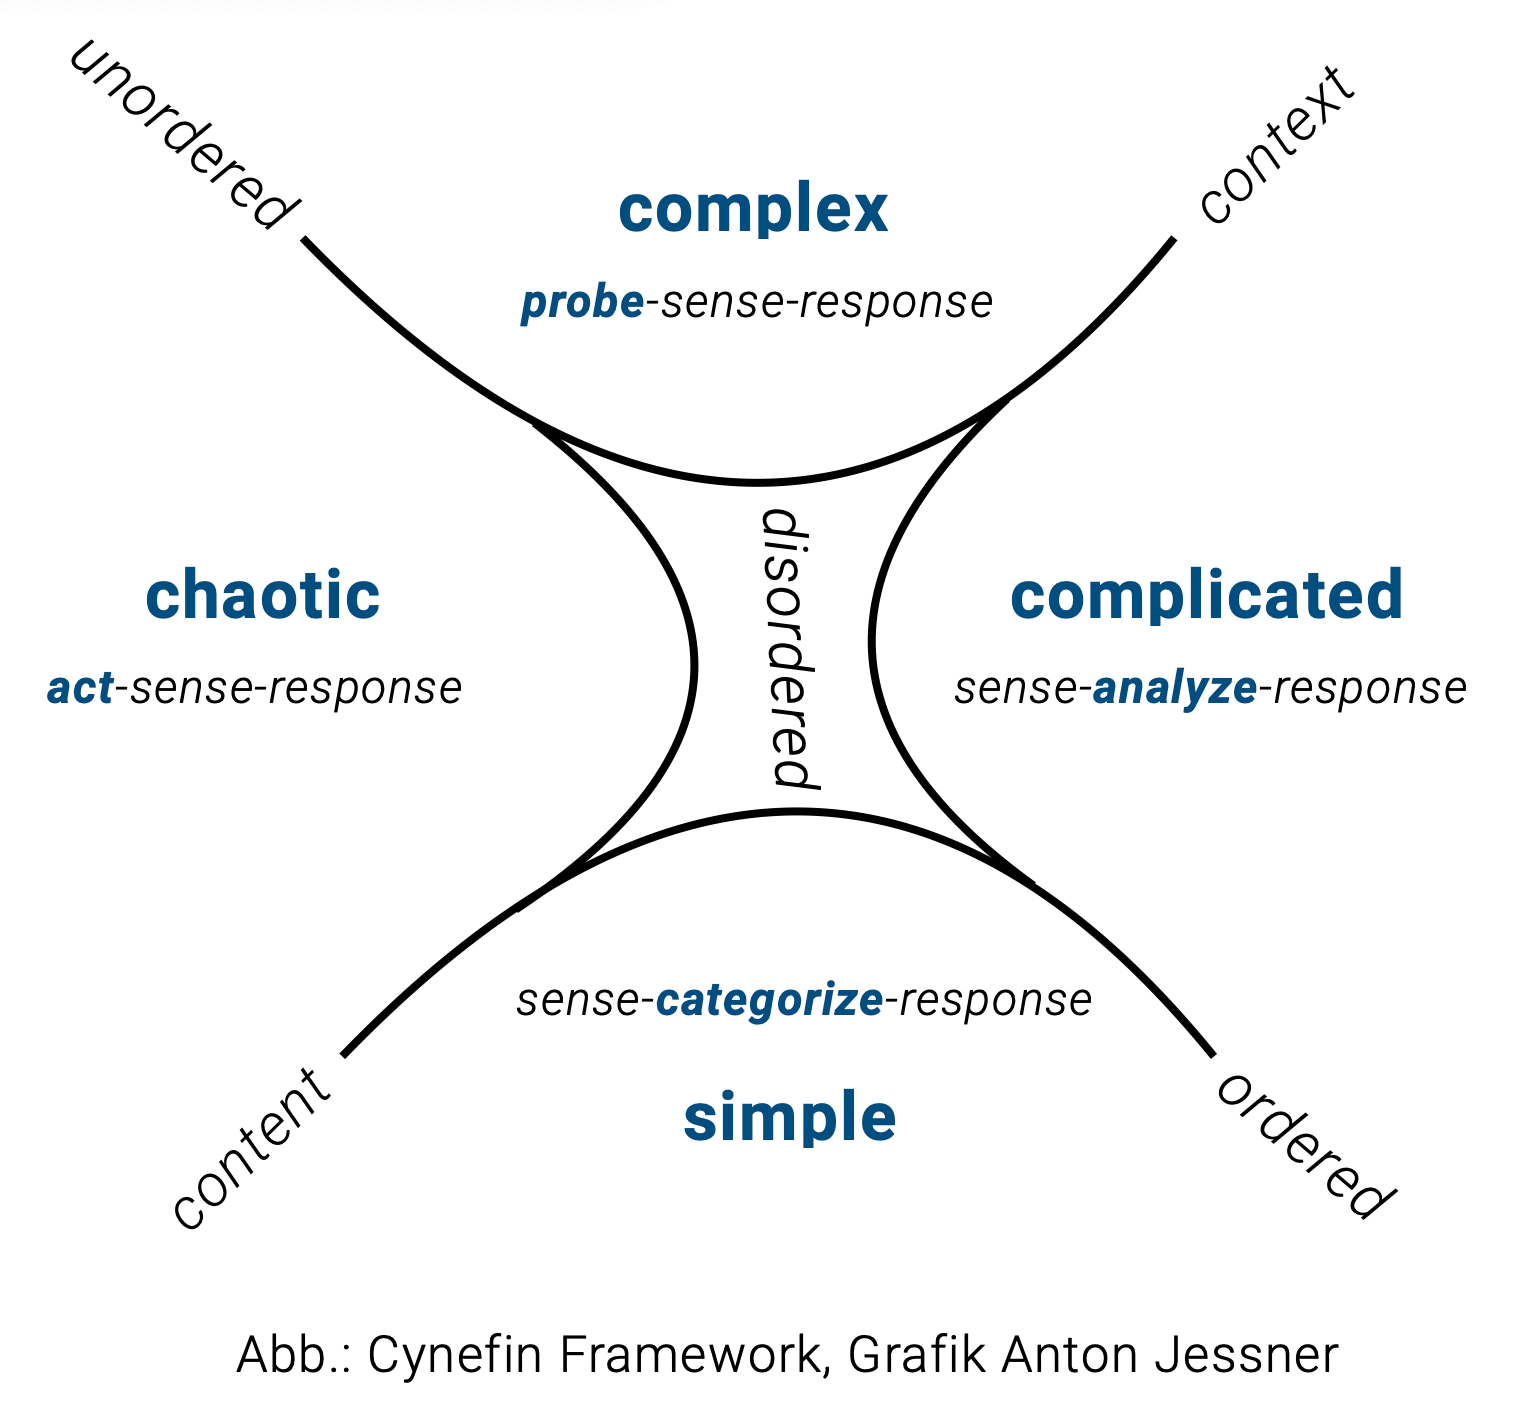 Abb.: Cynefin Framework, Grafik Anton Jessner